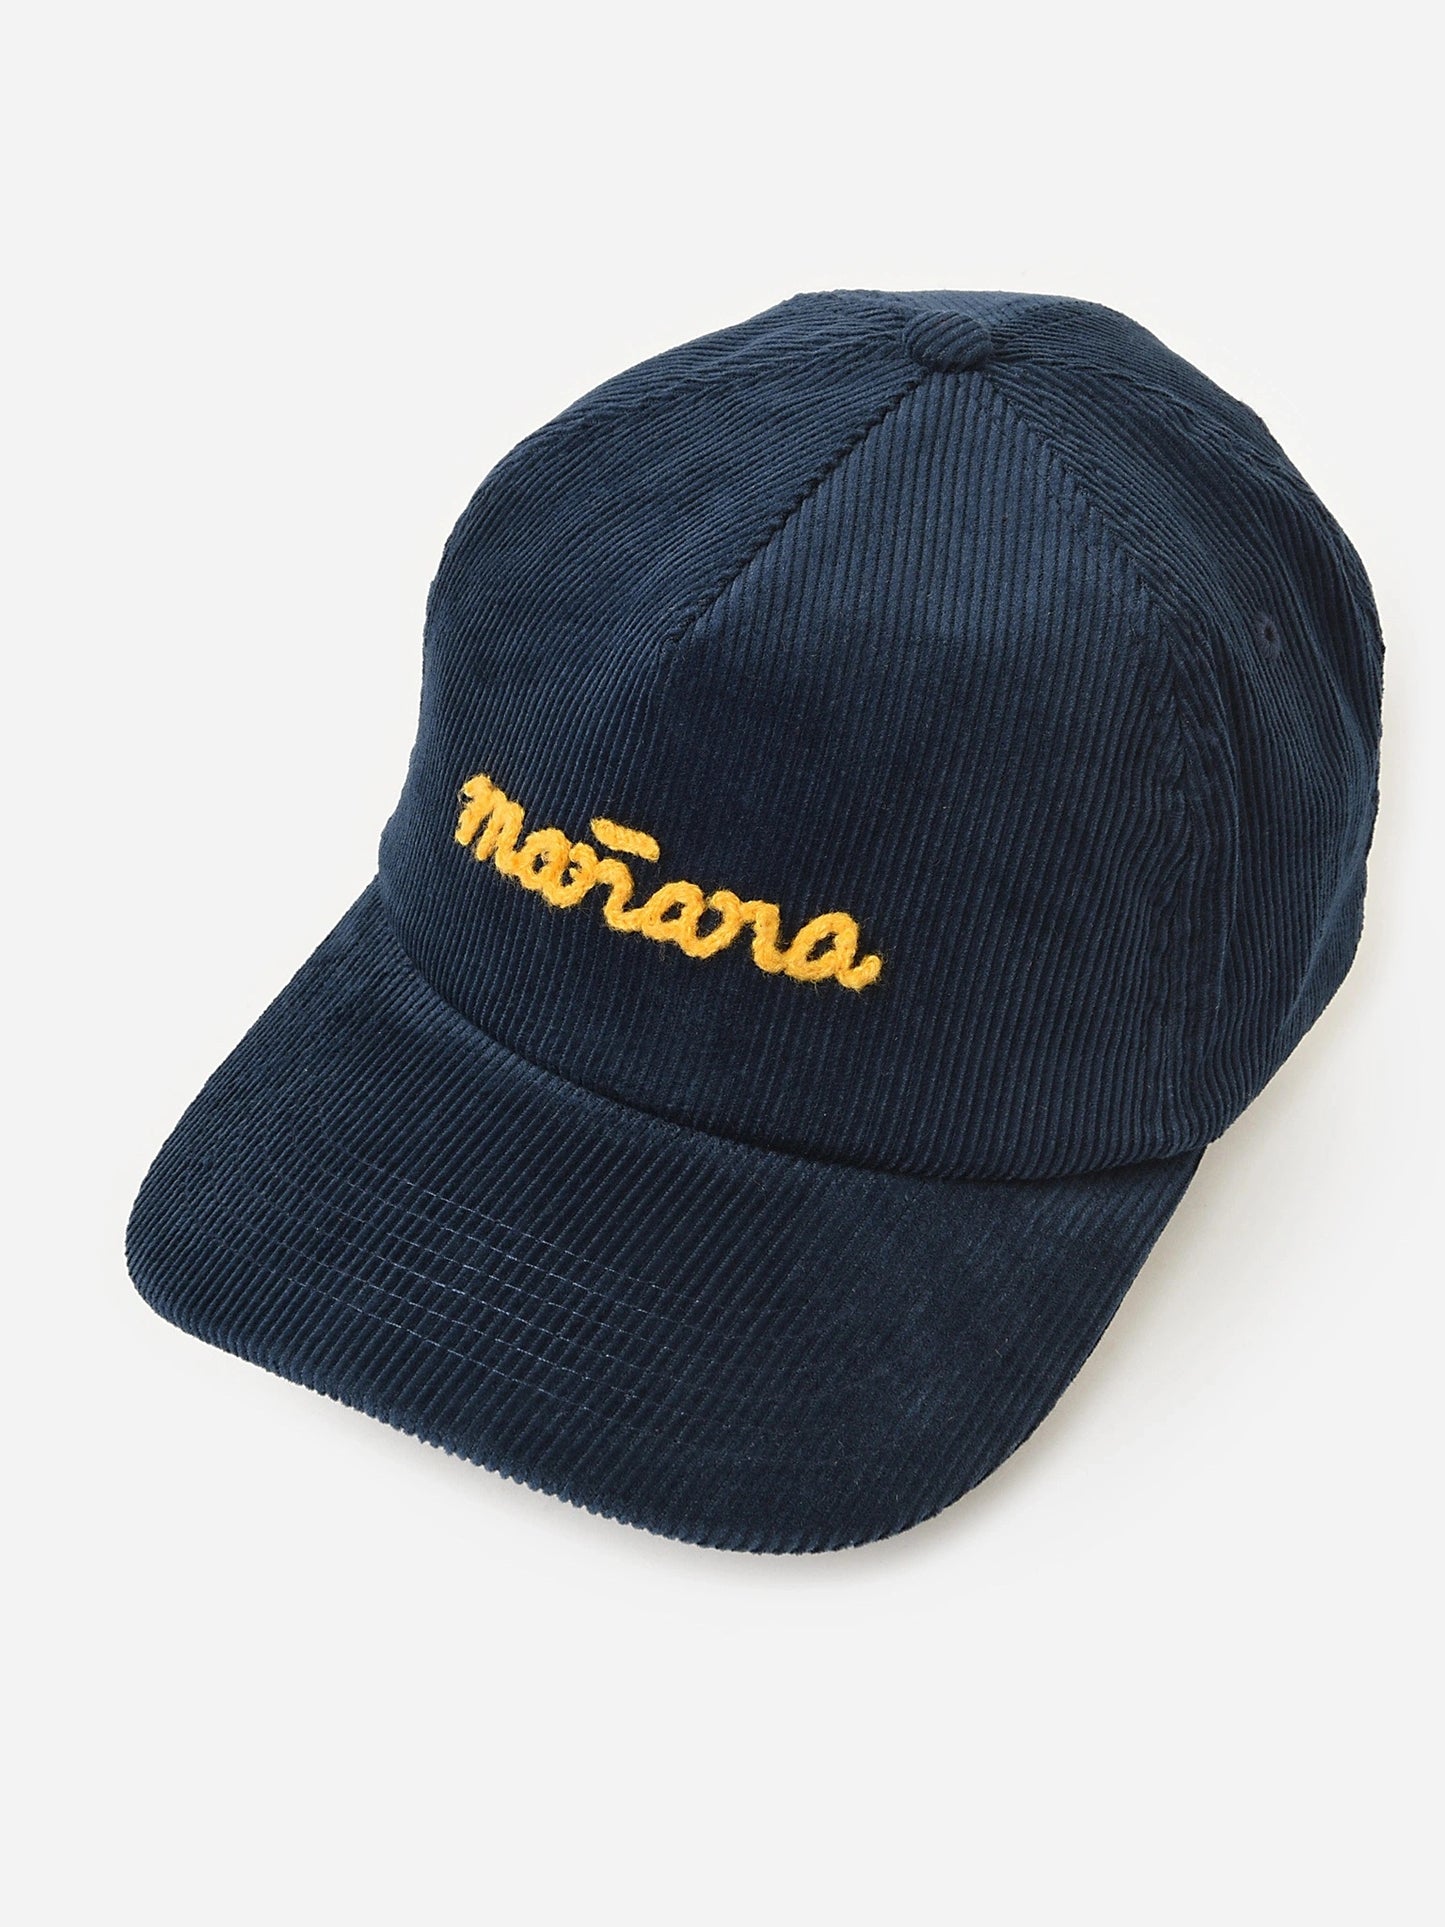 Mañana Men's Corduroy + Chainstitch Logo Hat